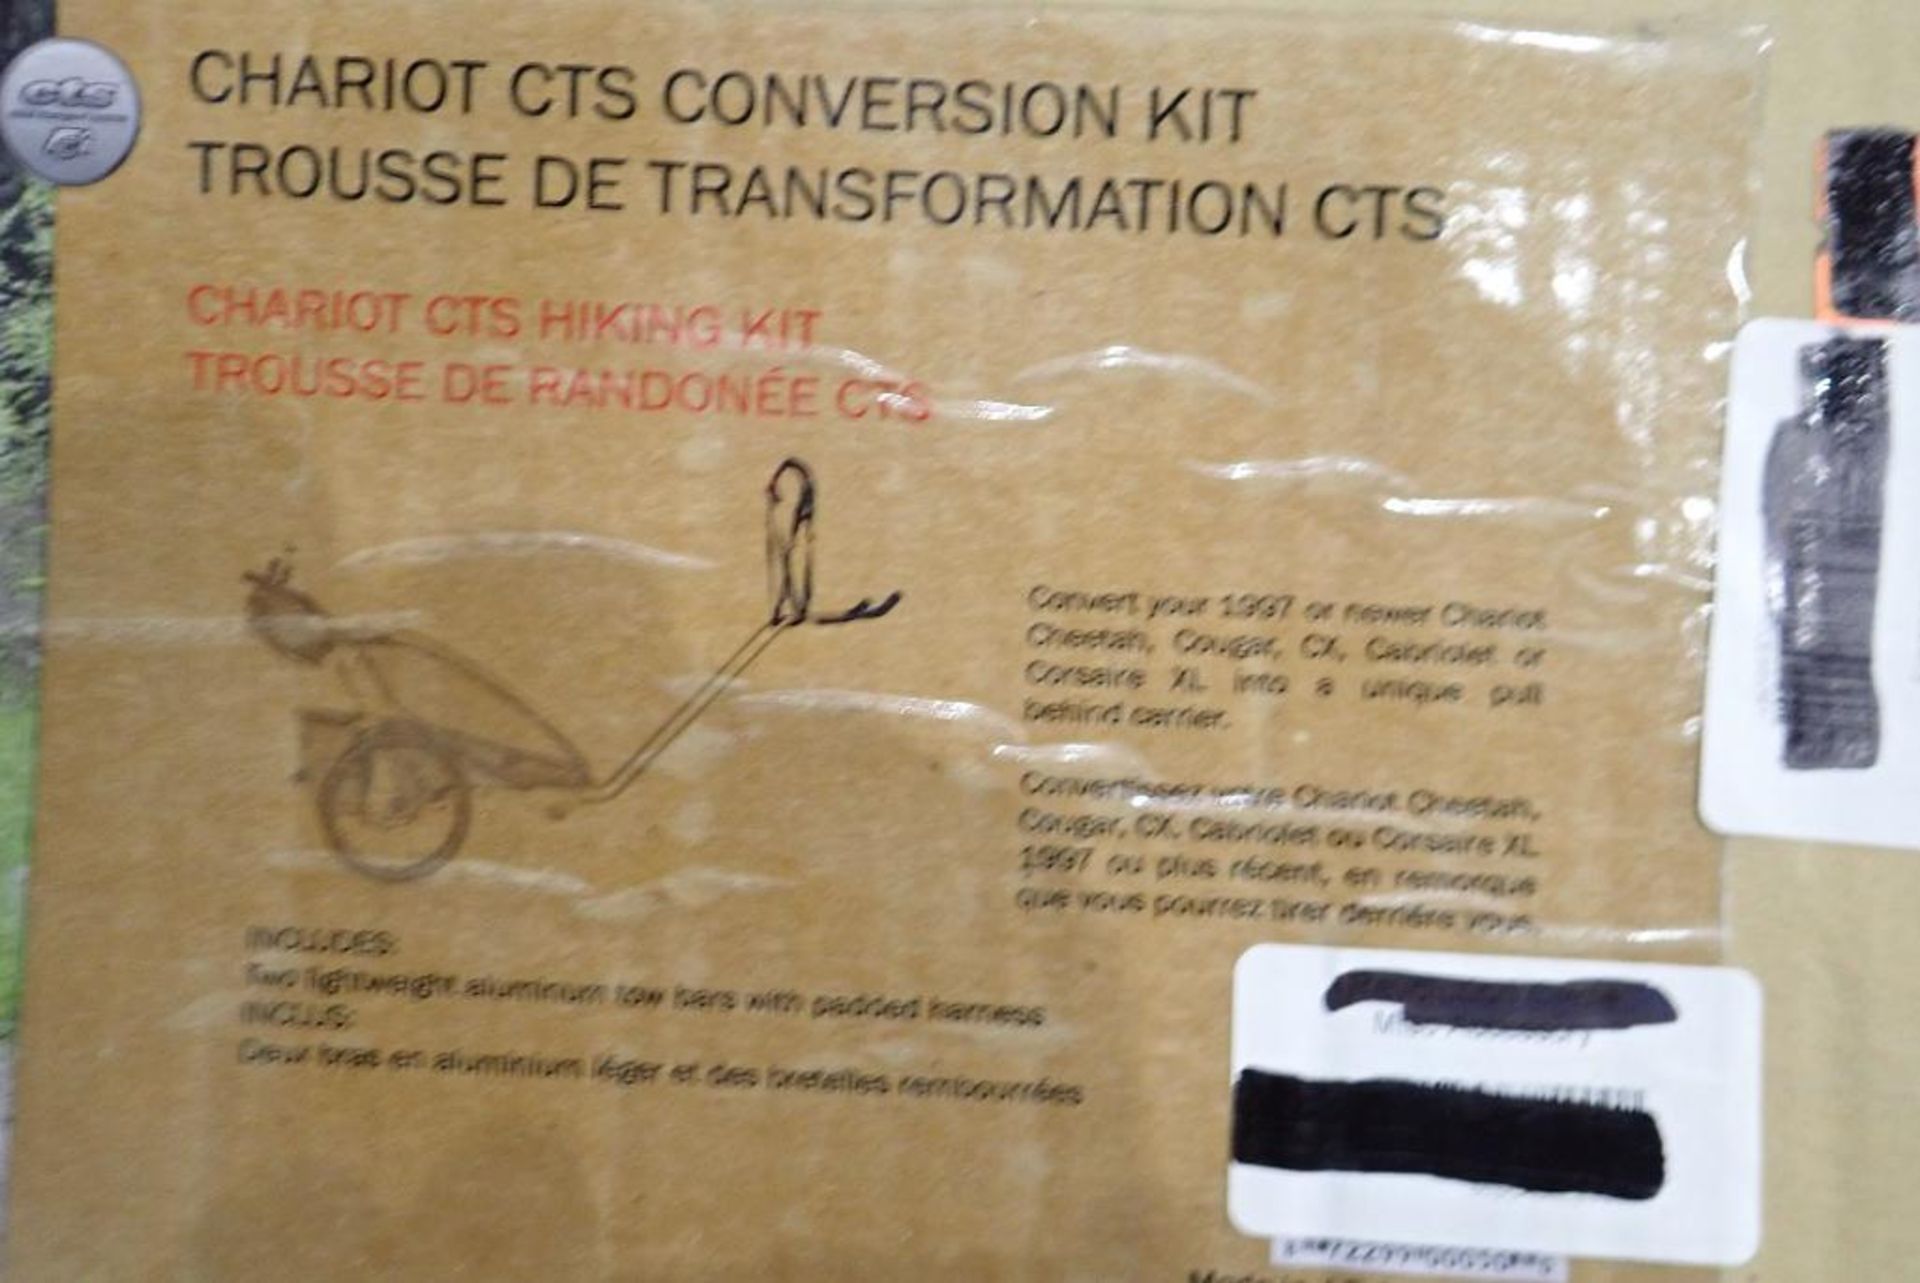 Chariot CTS Hiking Conversion Kit.